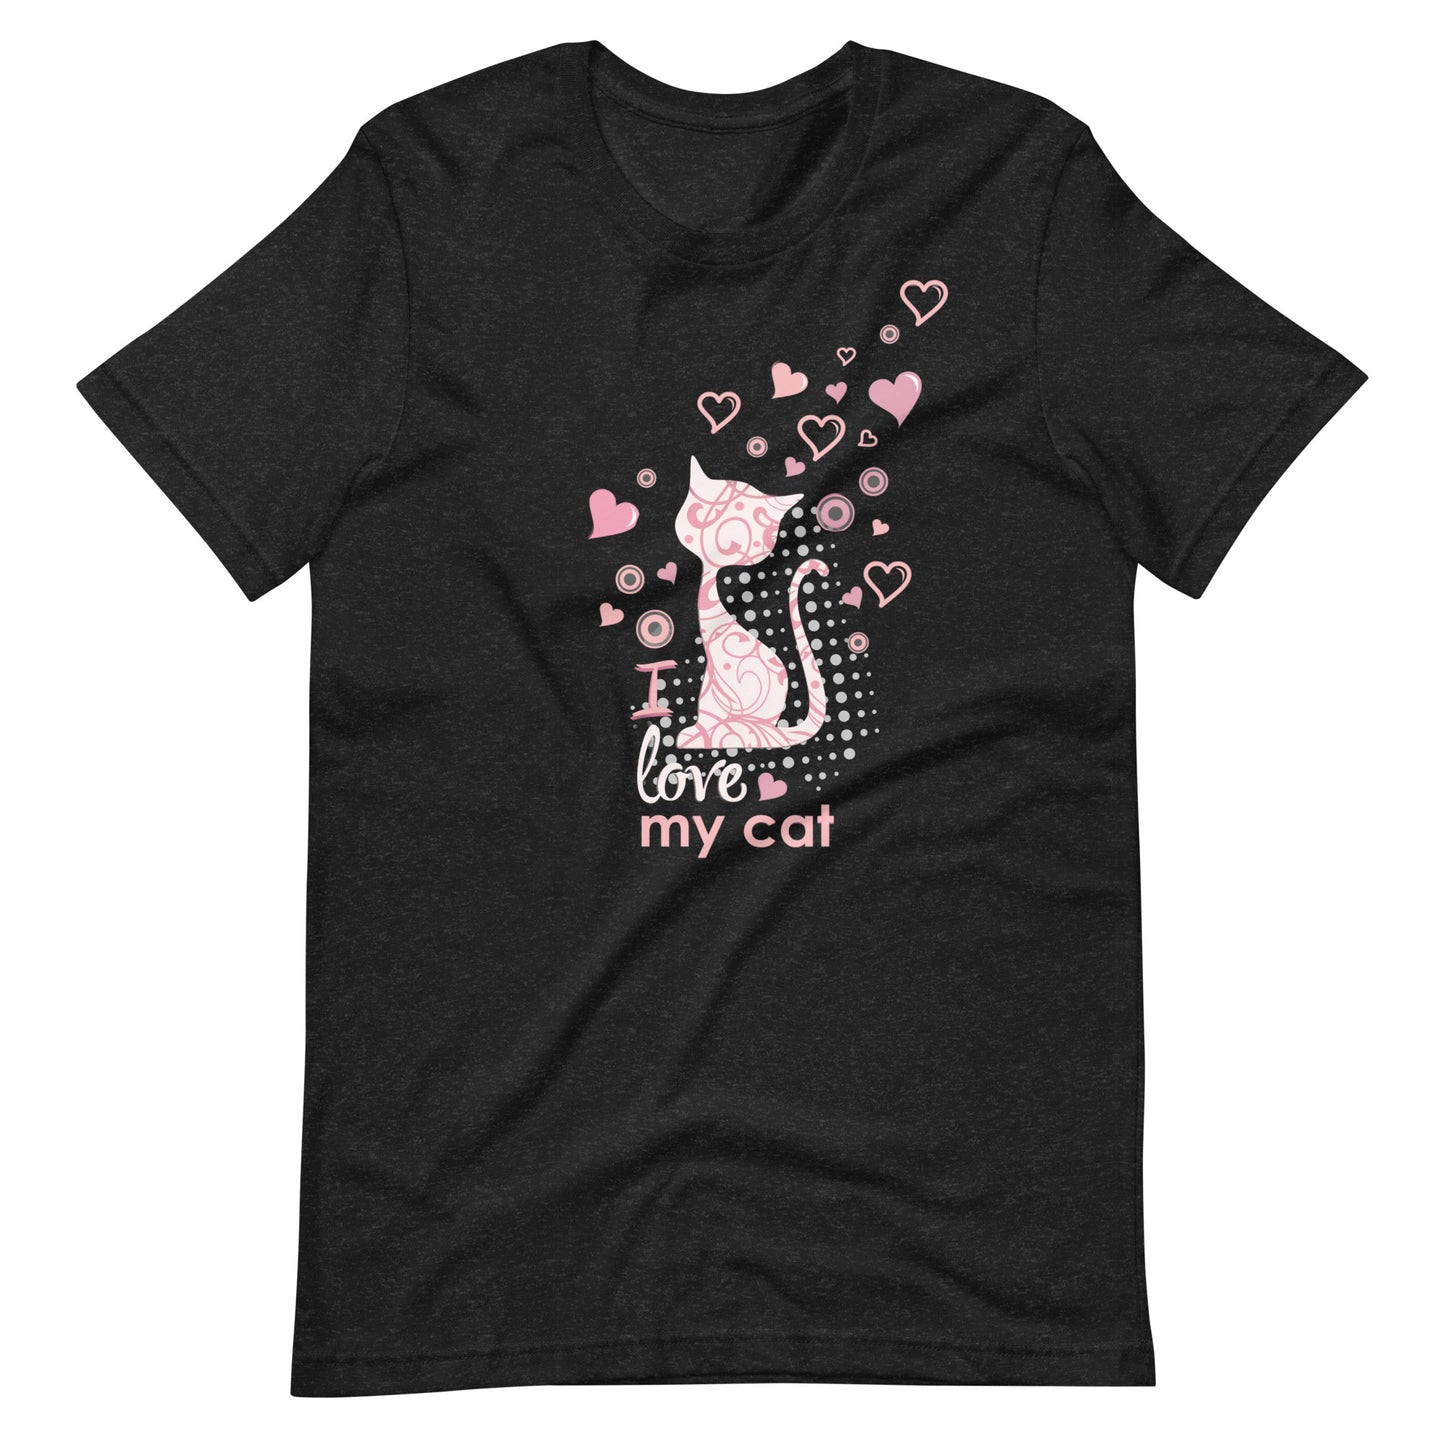 I Love My Cat - T-Shirt Unisex -